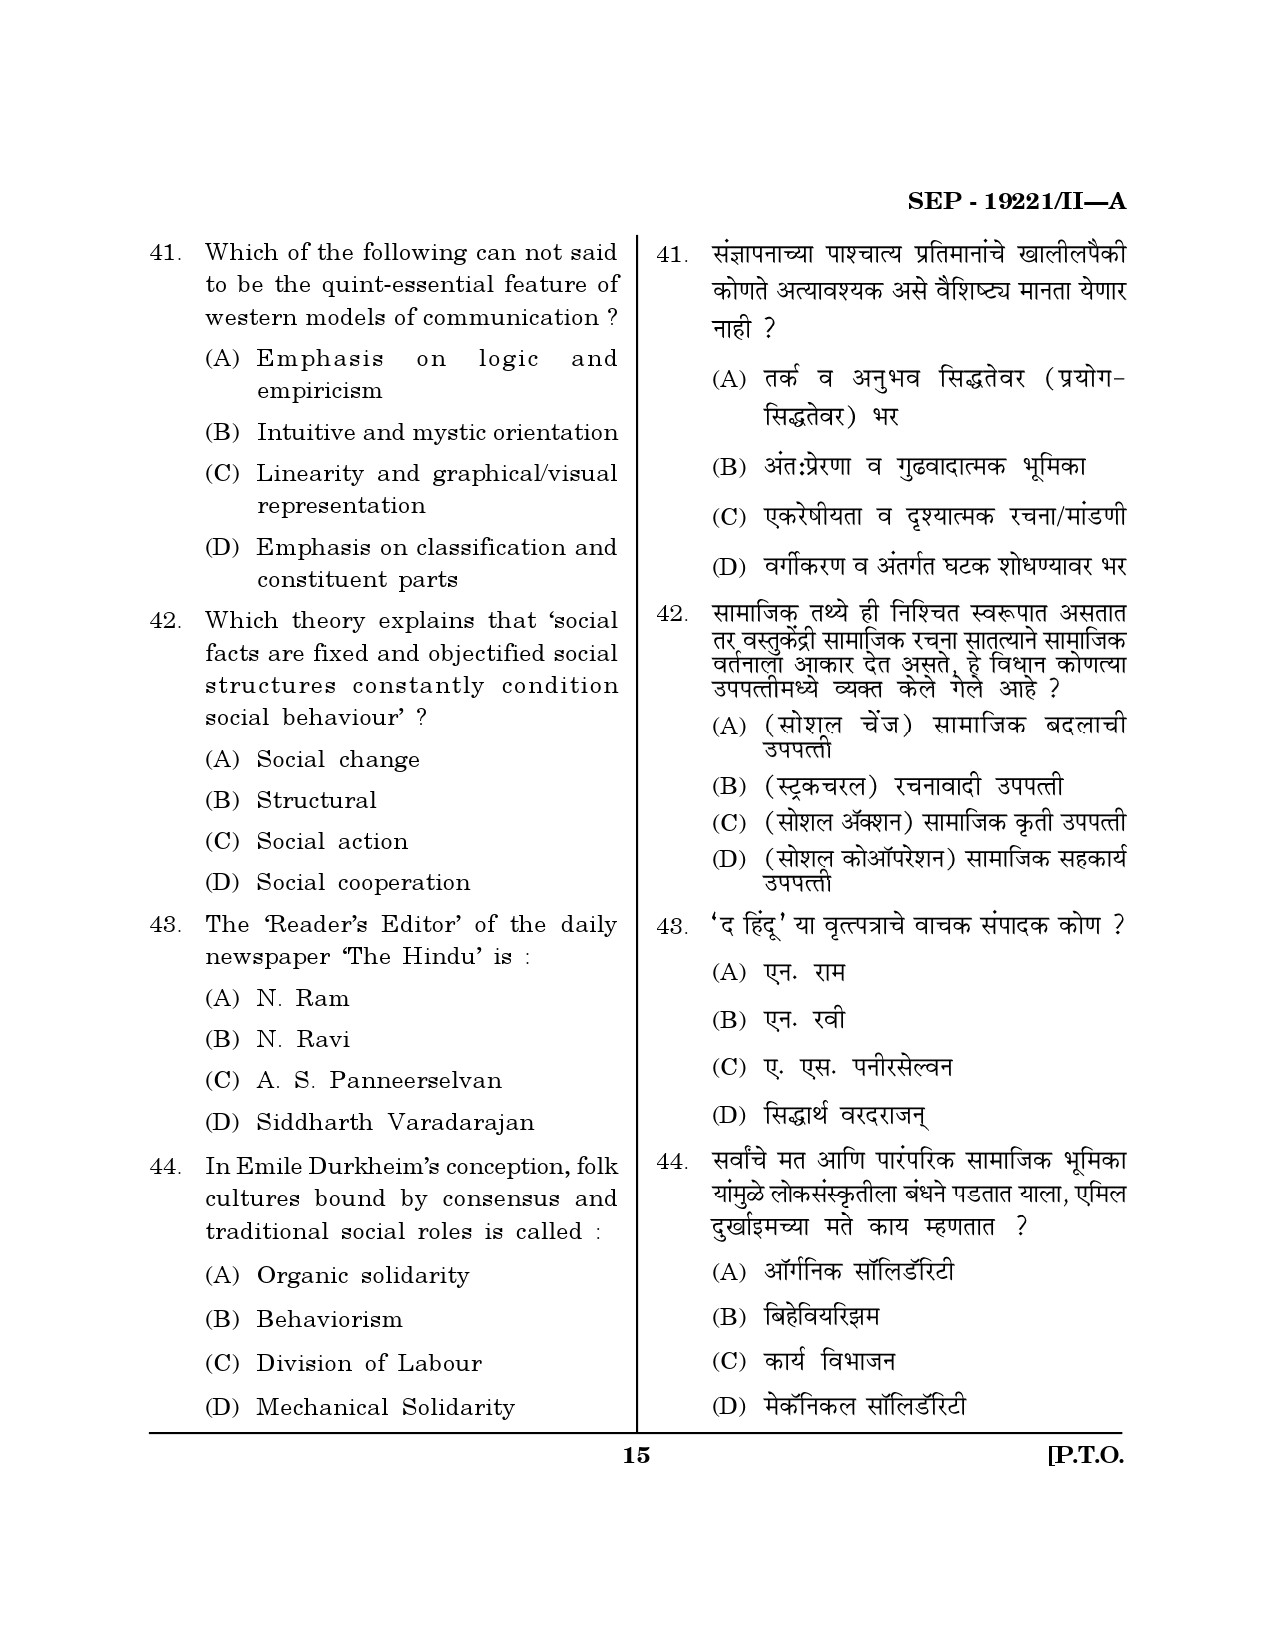 Maharashtra SET Journalism and Mass Communication Exam Question Paper September 2021 14